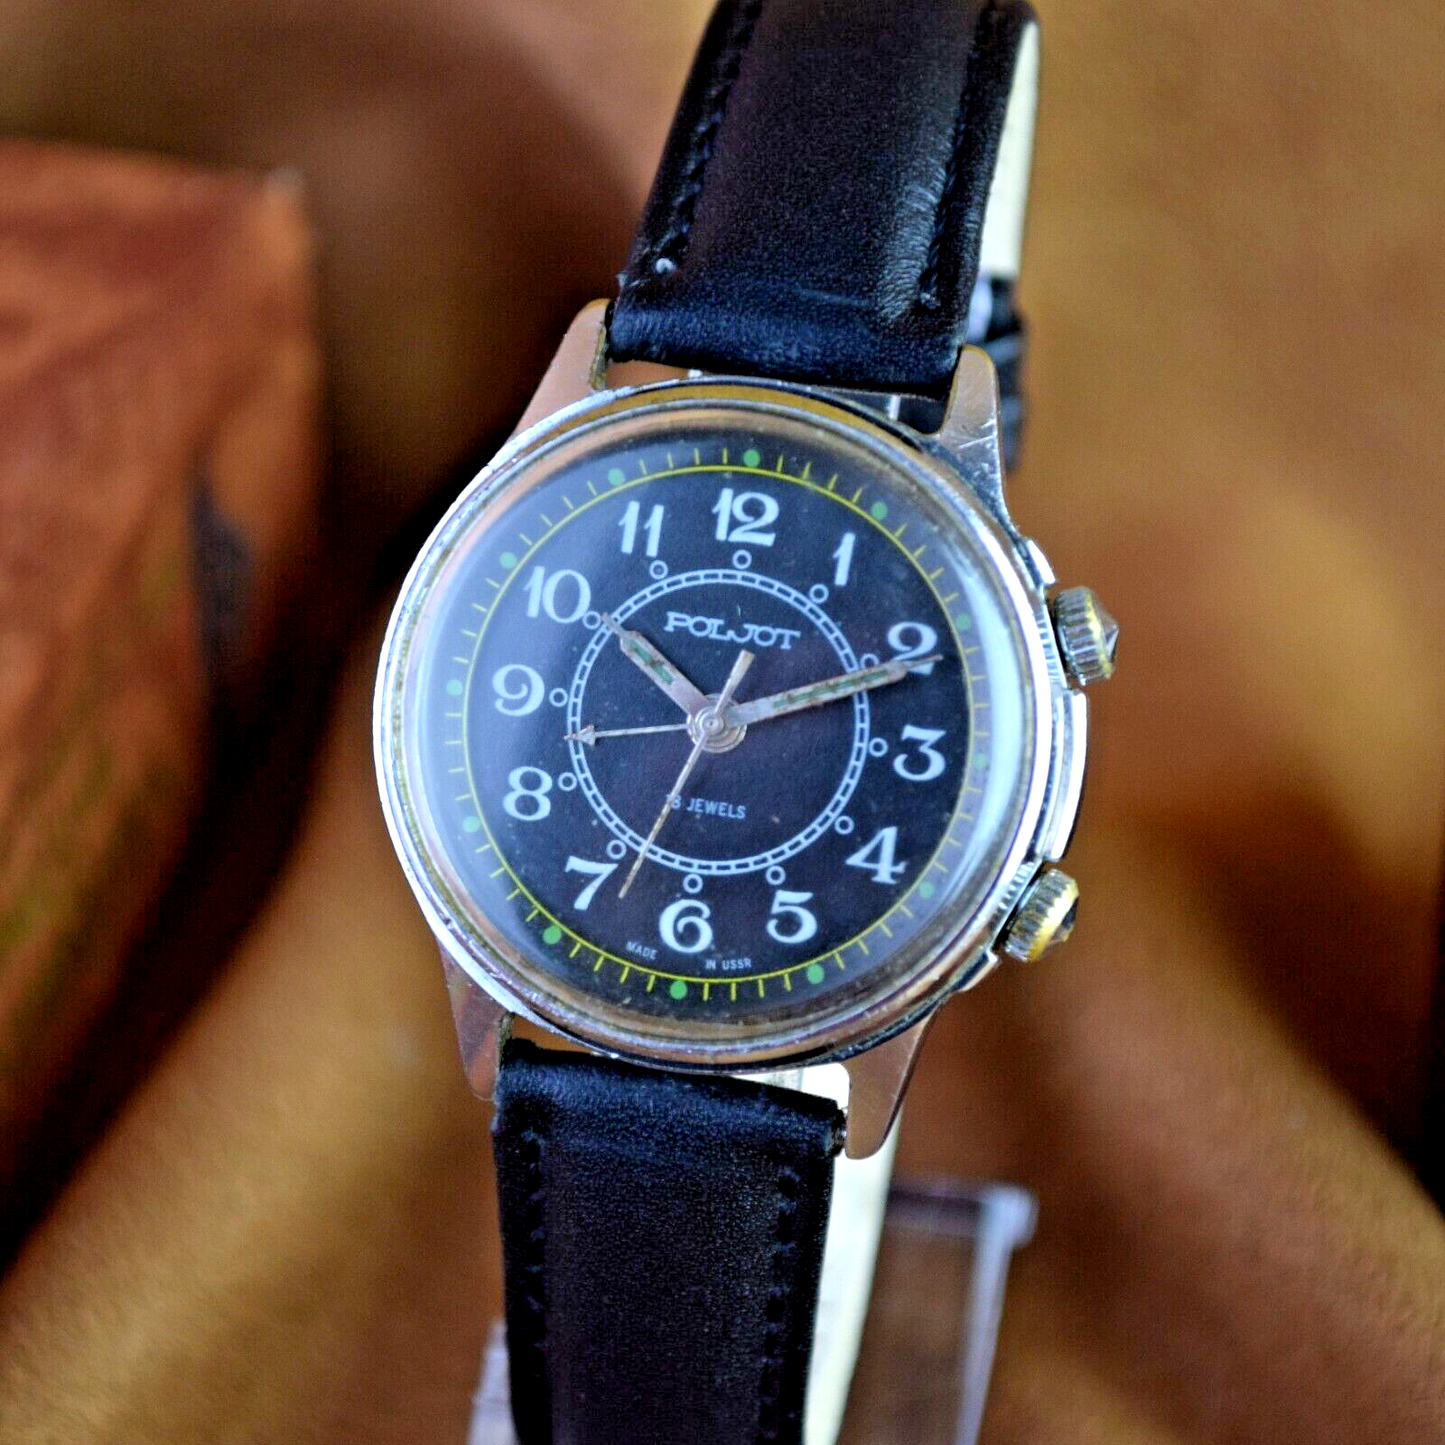 Soviet Wristwatch POLJOT Alarm Signal Vintage Russian USSR Mechanical Watch 